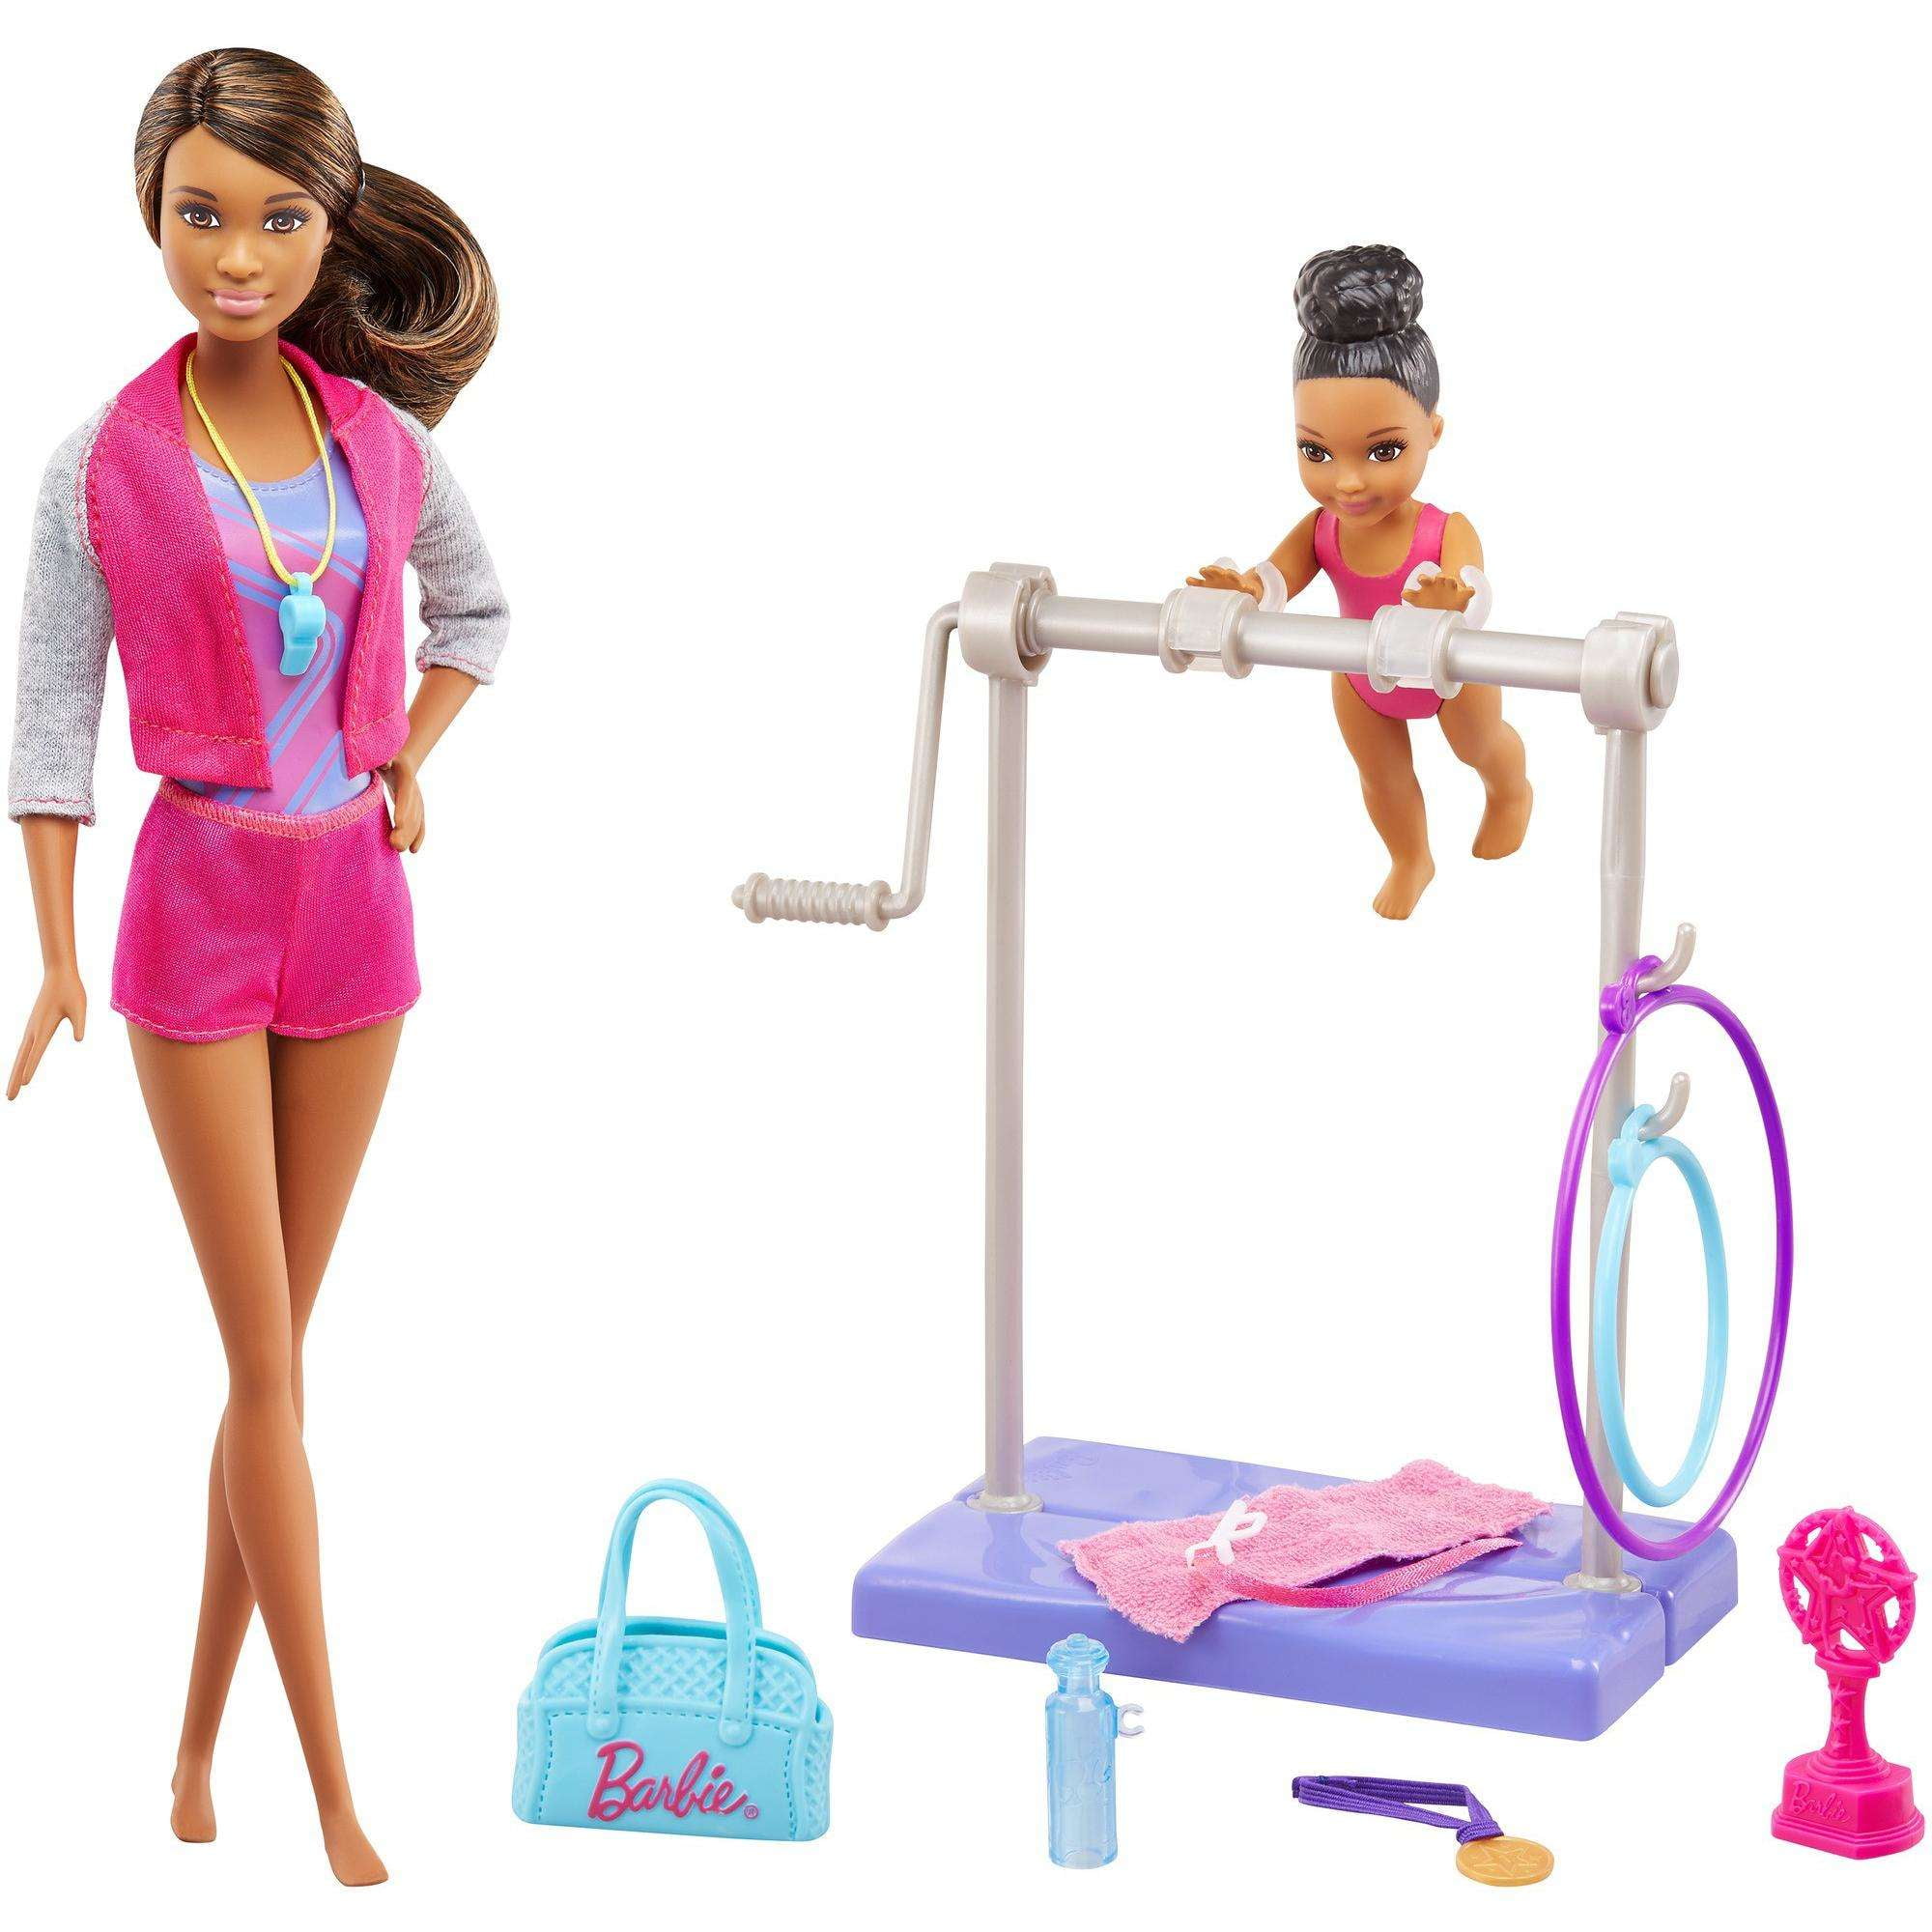 Barbie Gymnastics Playset with Coach Barbie Doll & Small Gymnast Doll